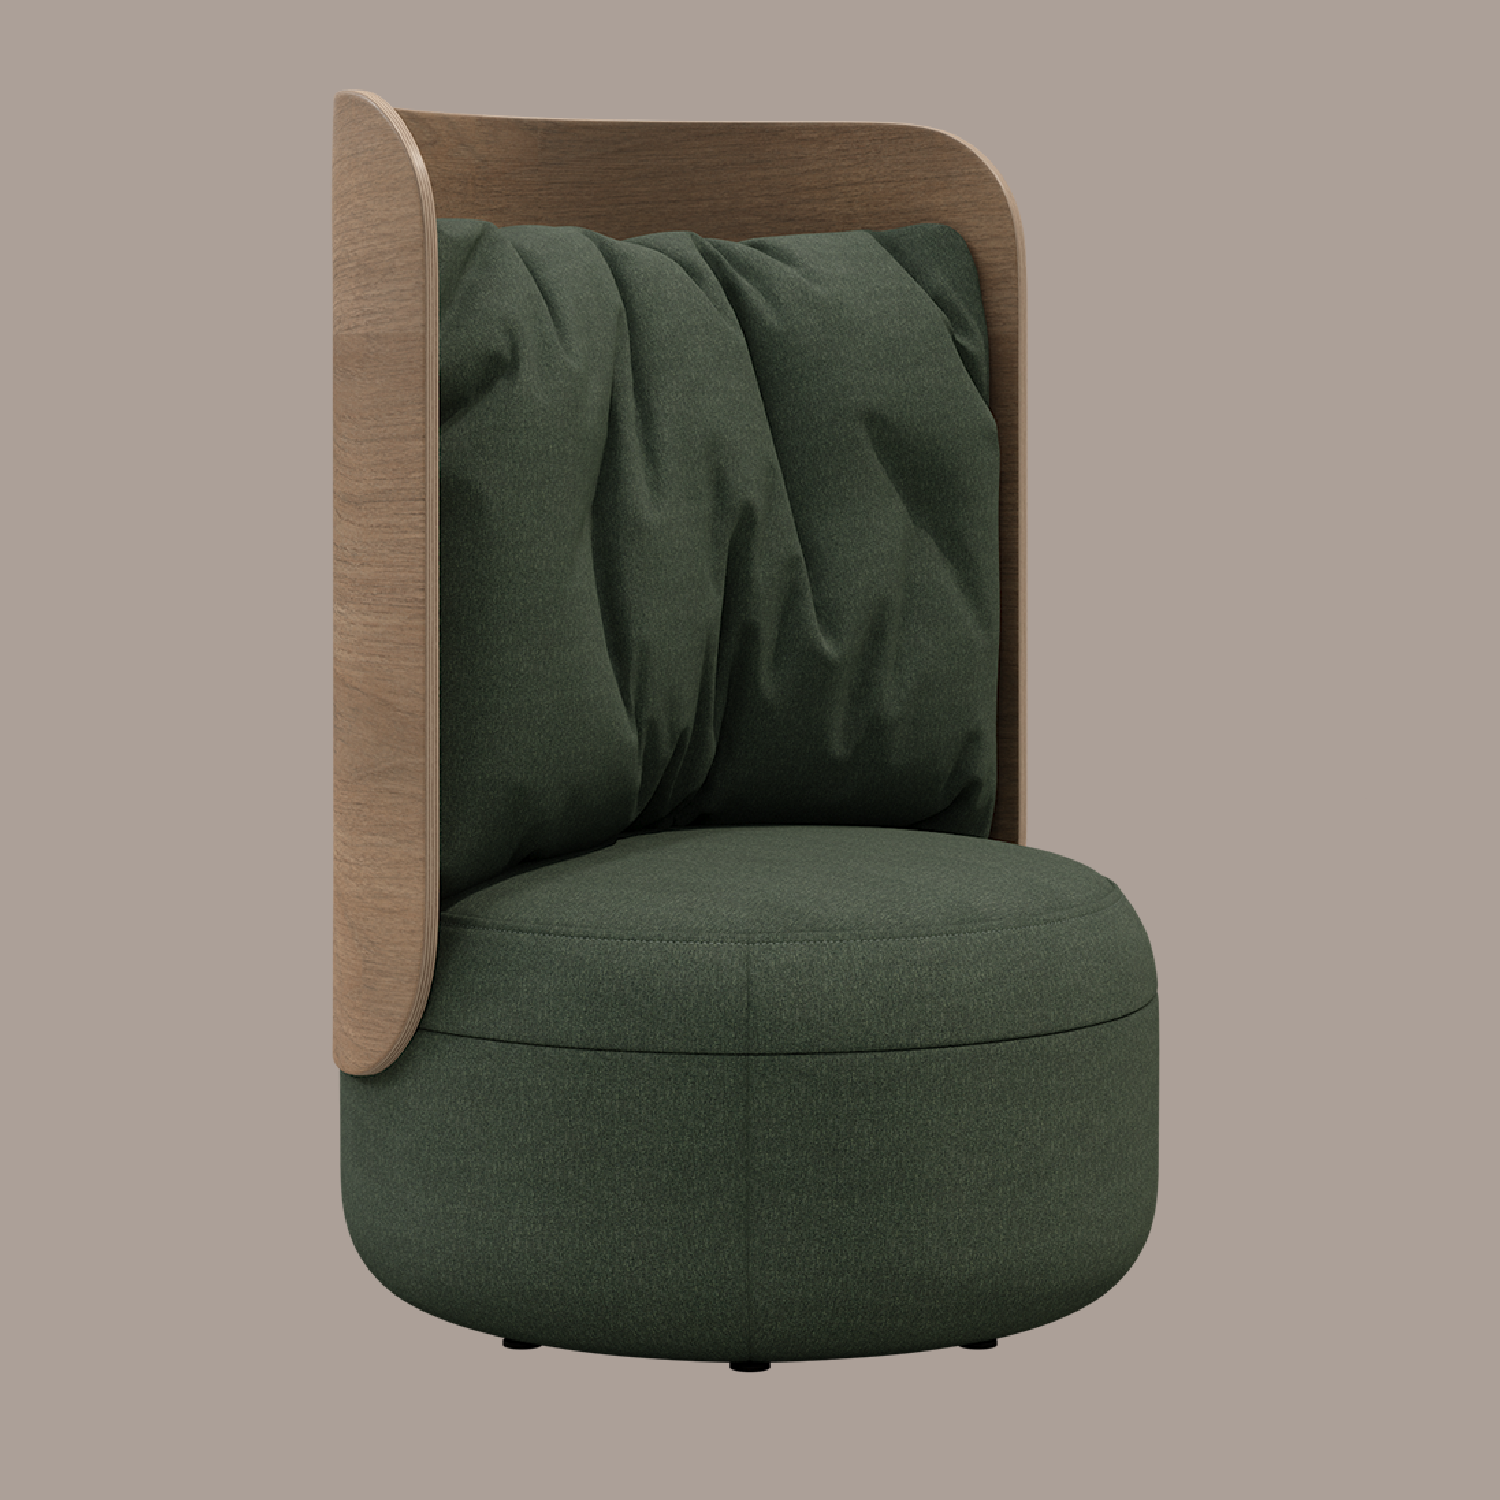 Dotti lounge chair by Union Design